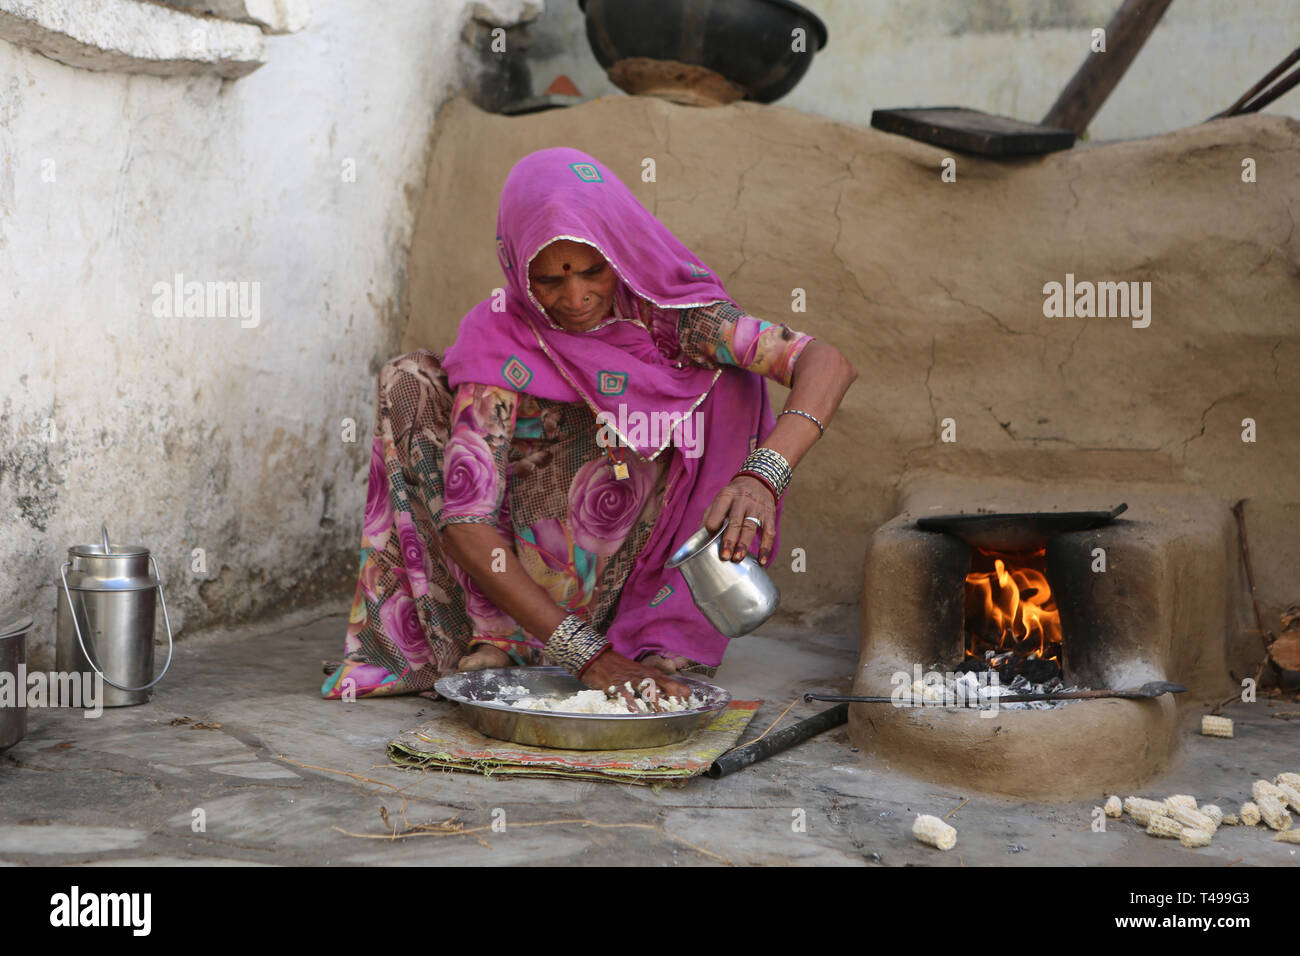 Indiano donna Rajasthani cucinare chapati --- chapatti pane indiano, Jodhpur, Rajasthan, India, Asia Foto Stock